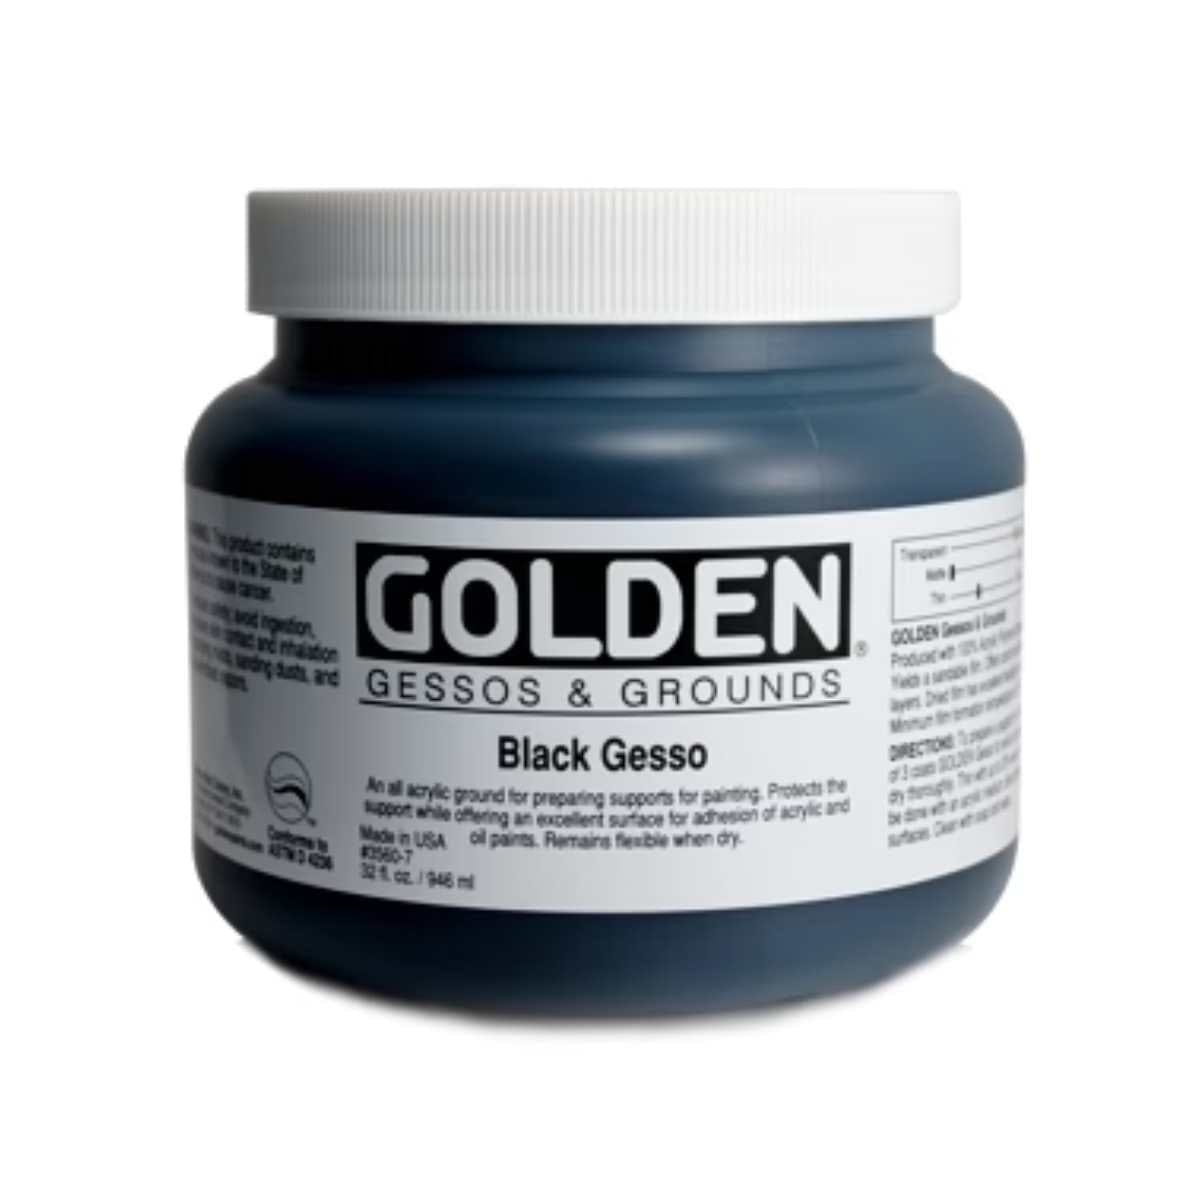 Golden Artist Colors GESSO-BLACK Golden - Black Gesso - 946ml - Item #3560-7